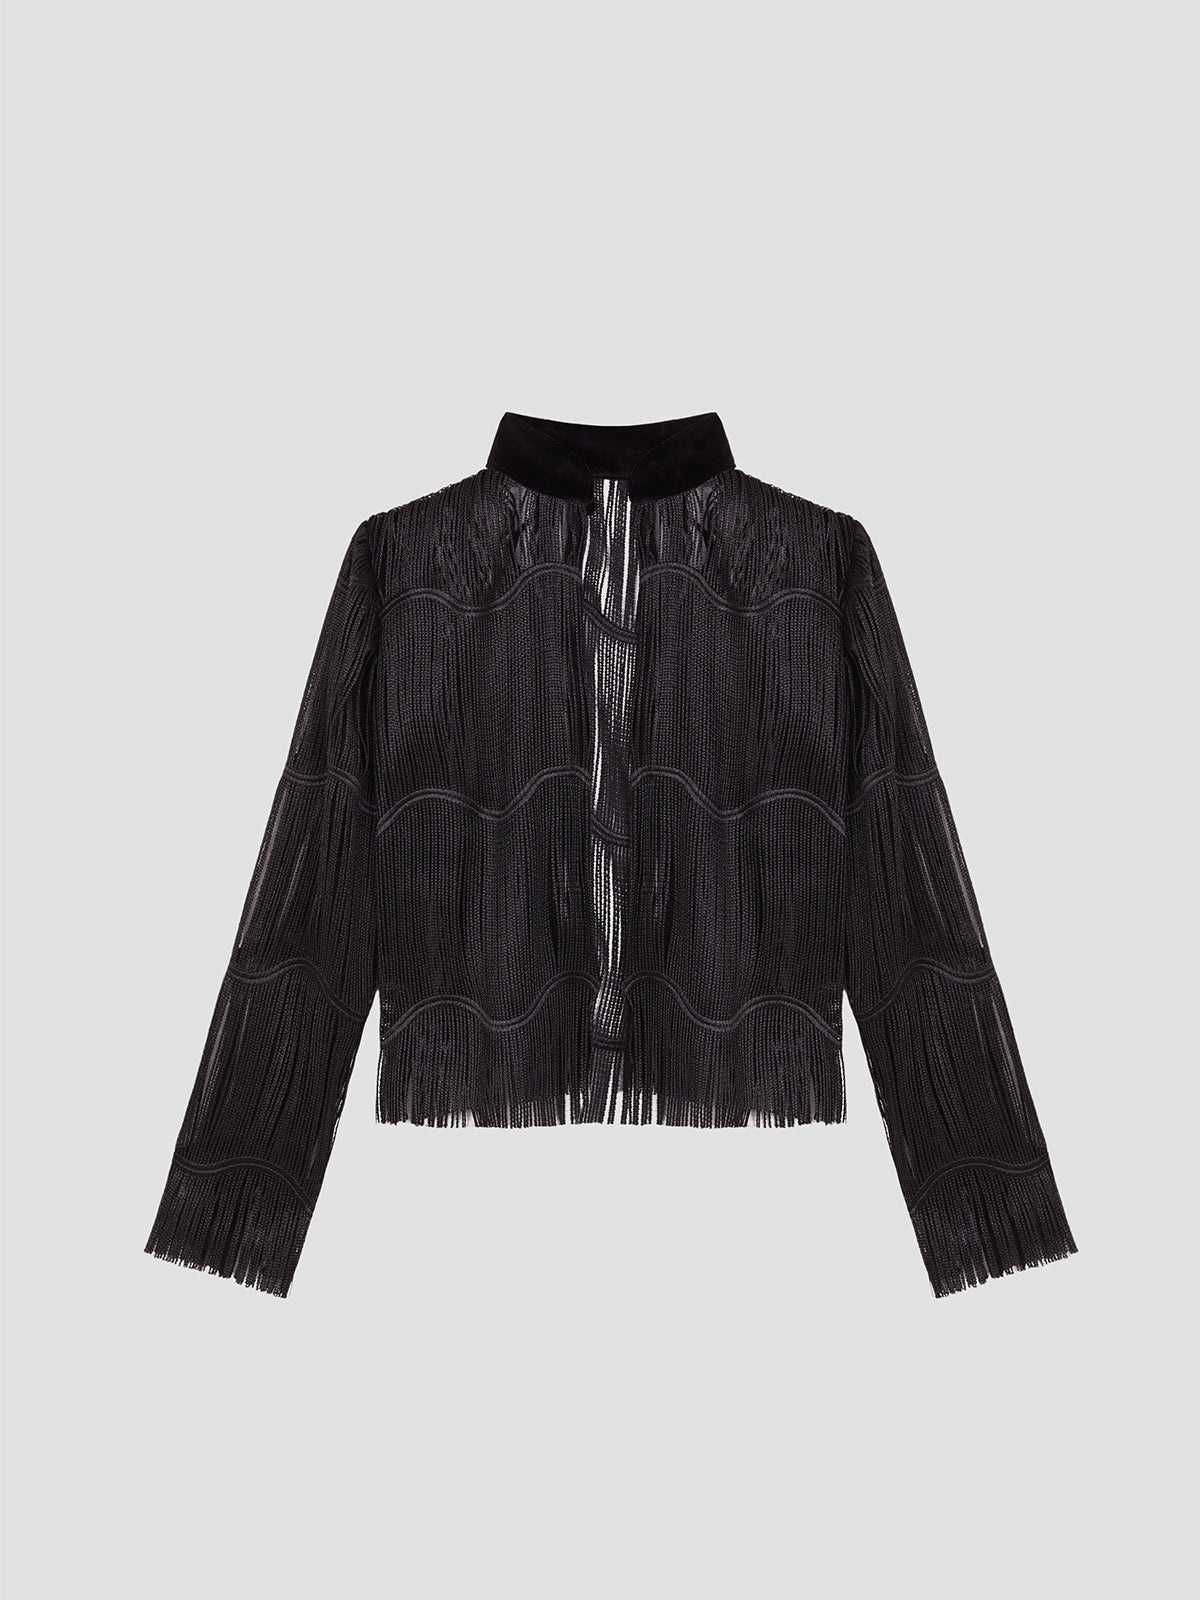 Black jacket made of black fringed strips